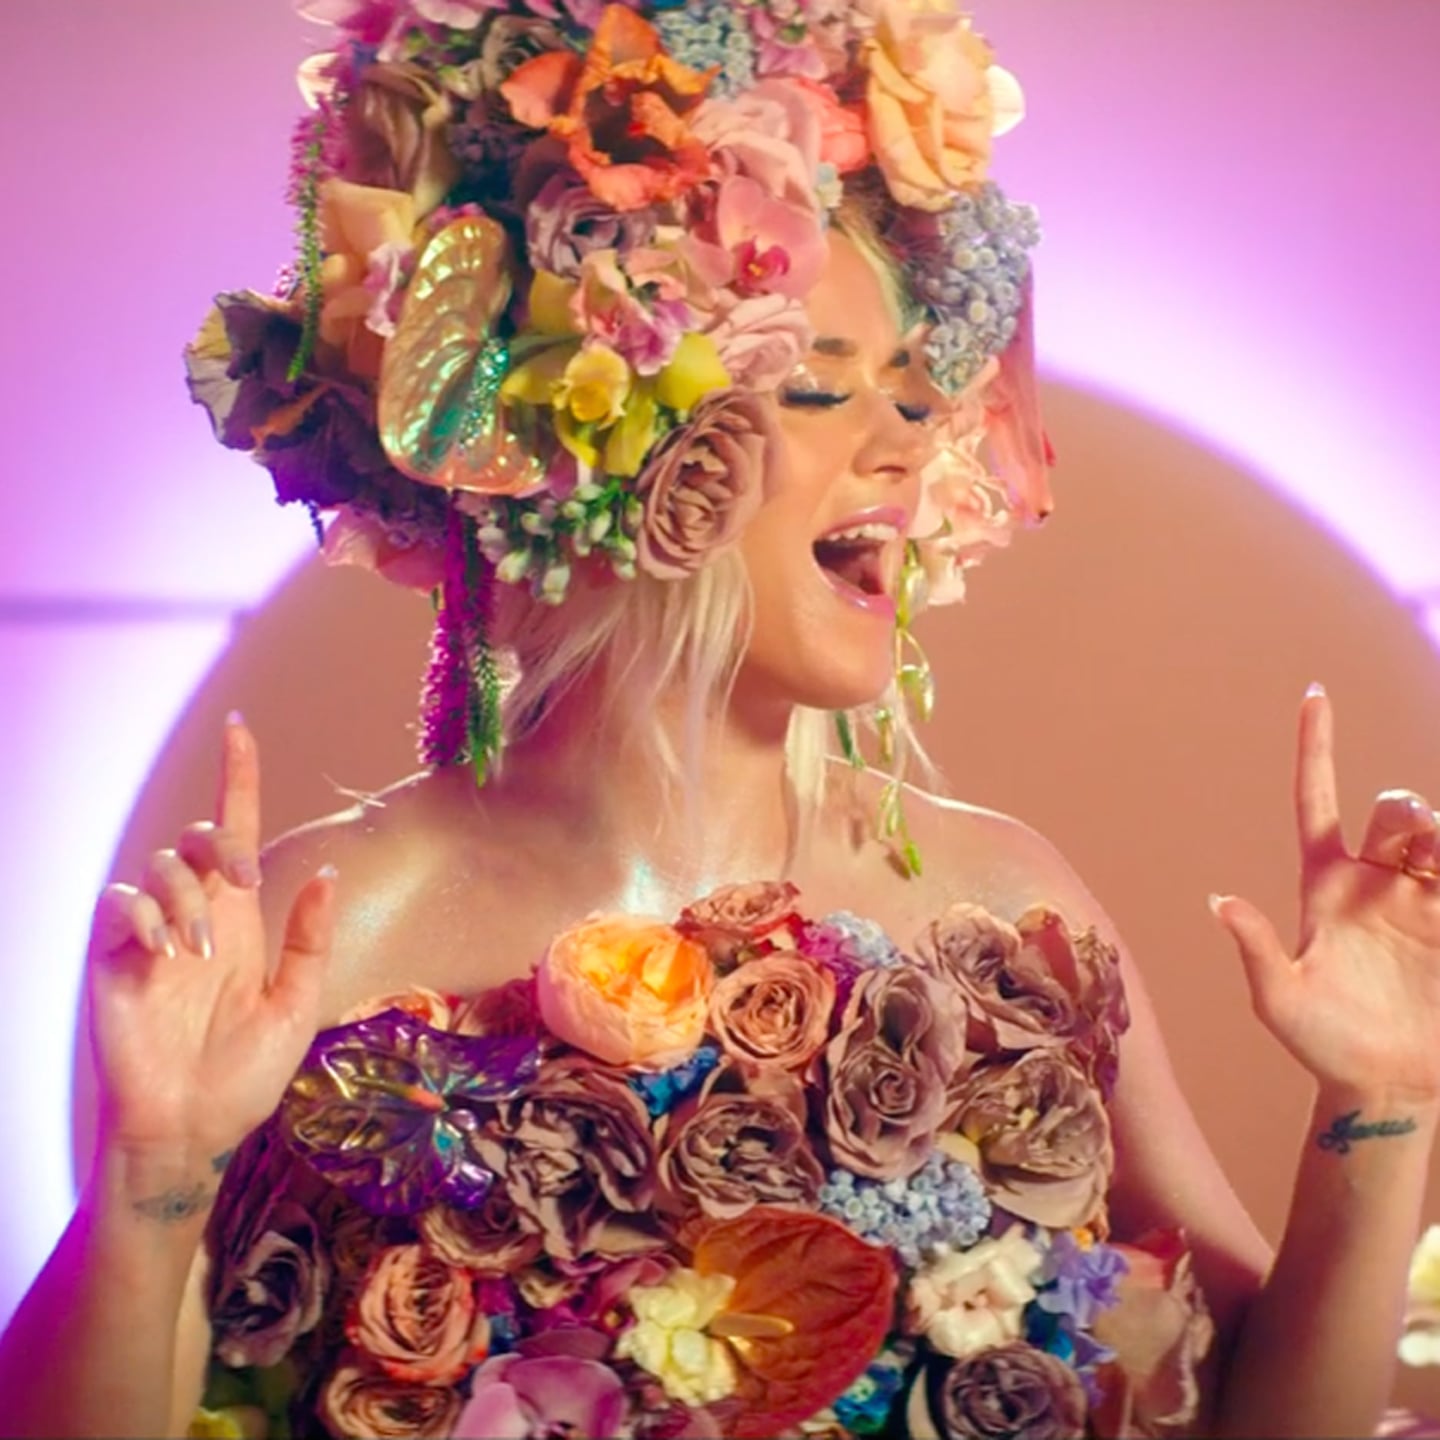 Katy Perry's Stylist, Jamie Mizrahi, Named Juicy Couture's Creative